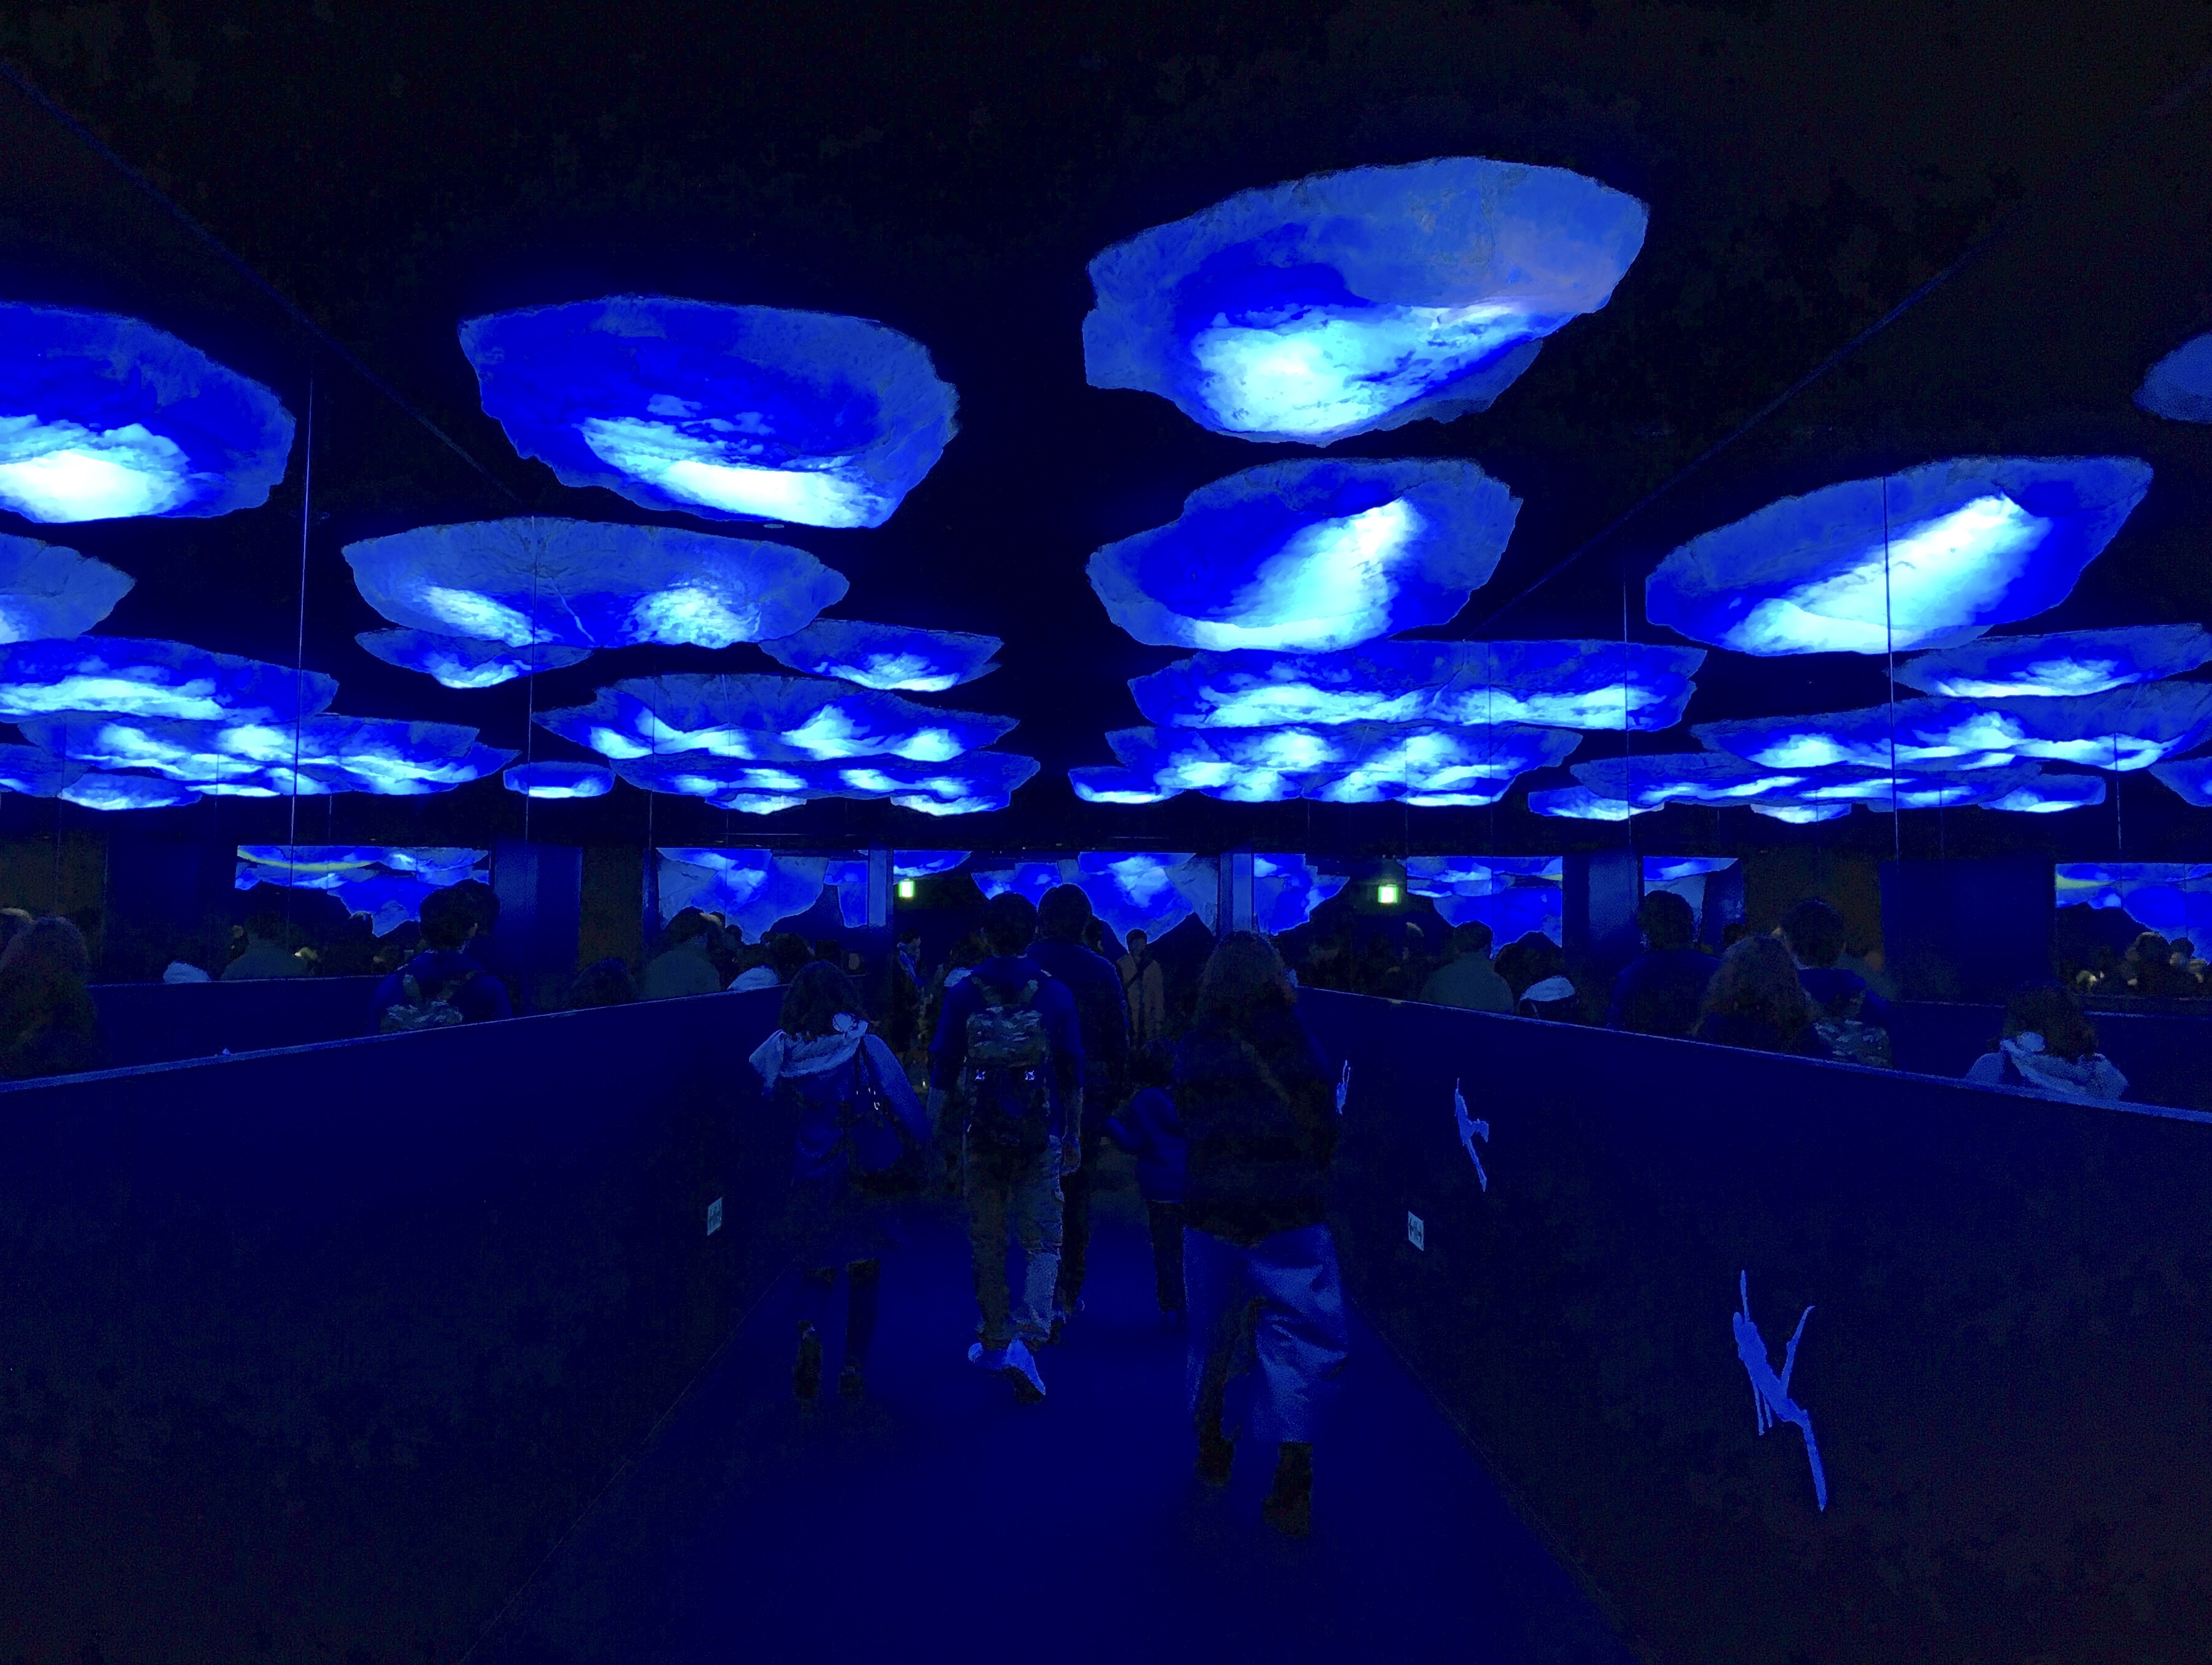 arctic ocean aquarium display dark blue lighting and fake icebergs on the ceiling 